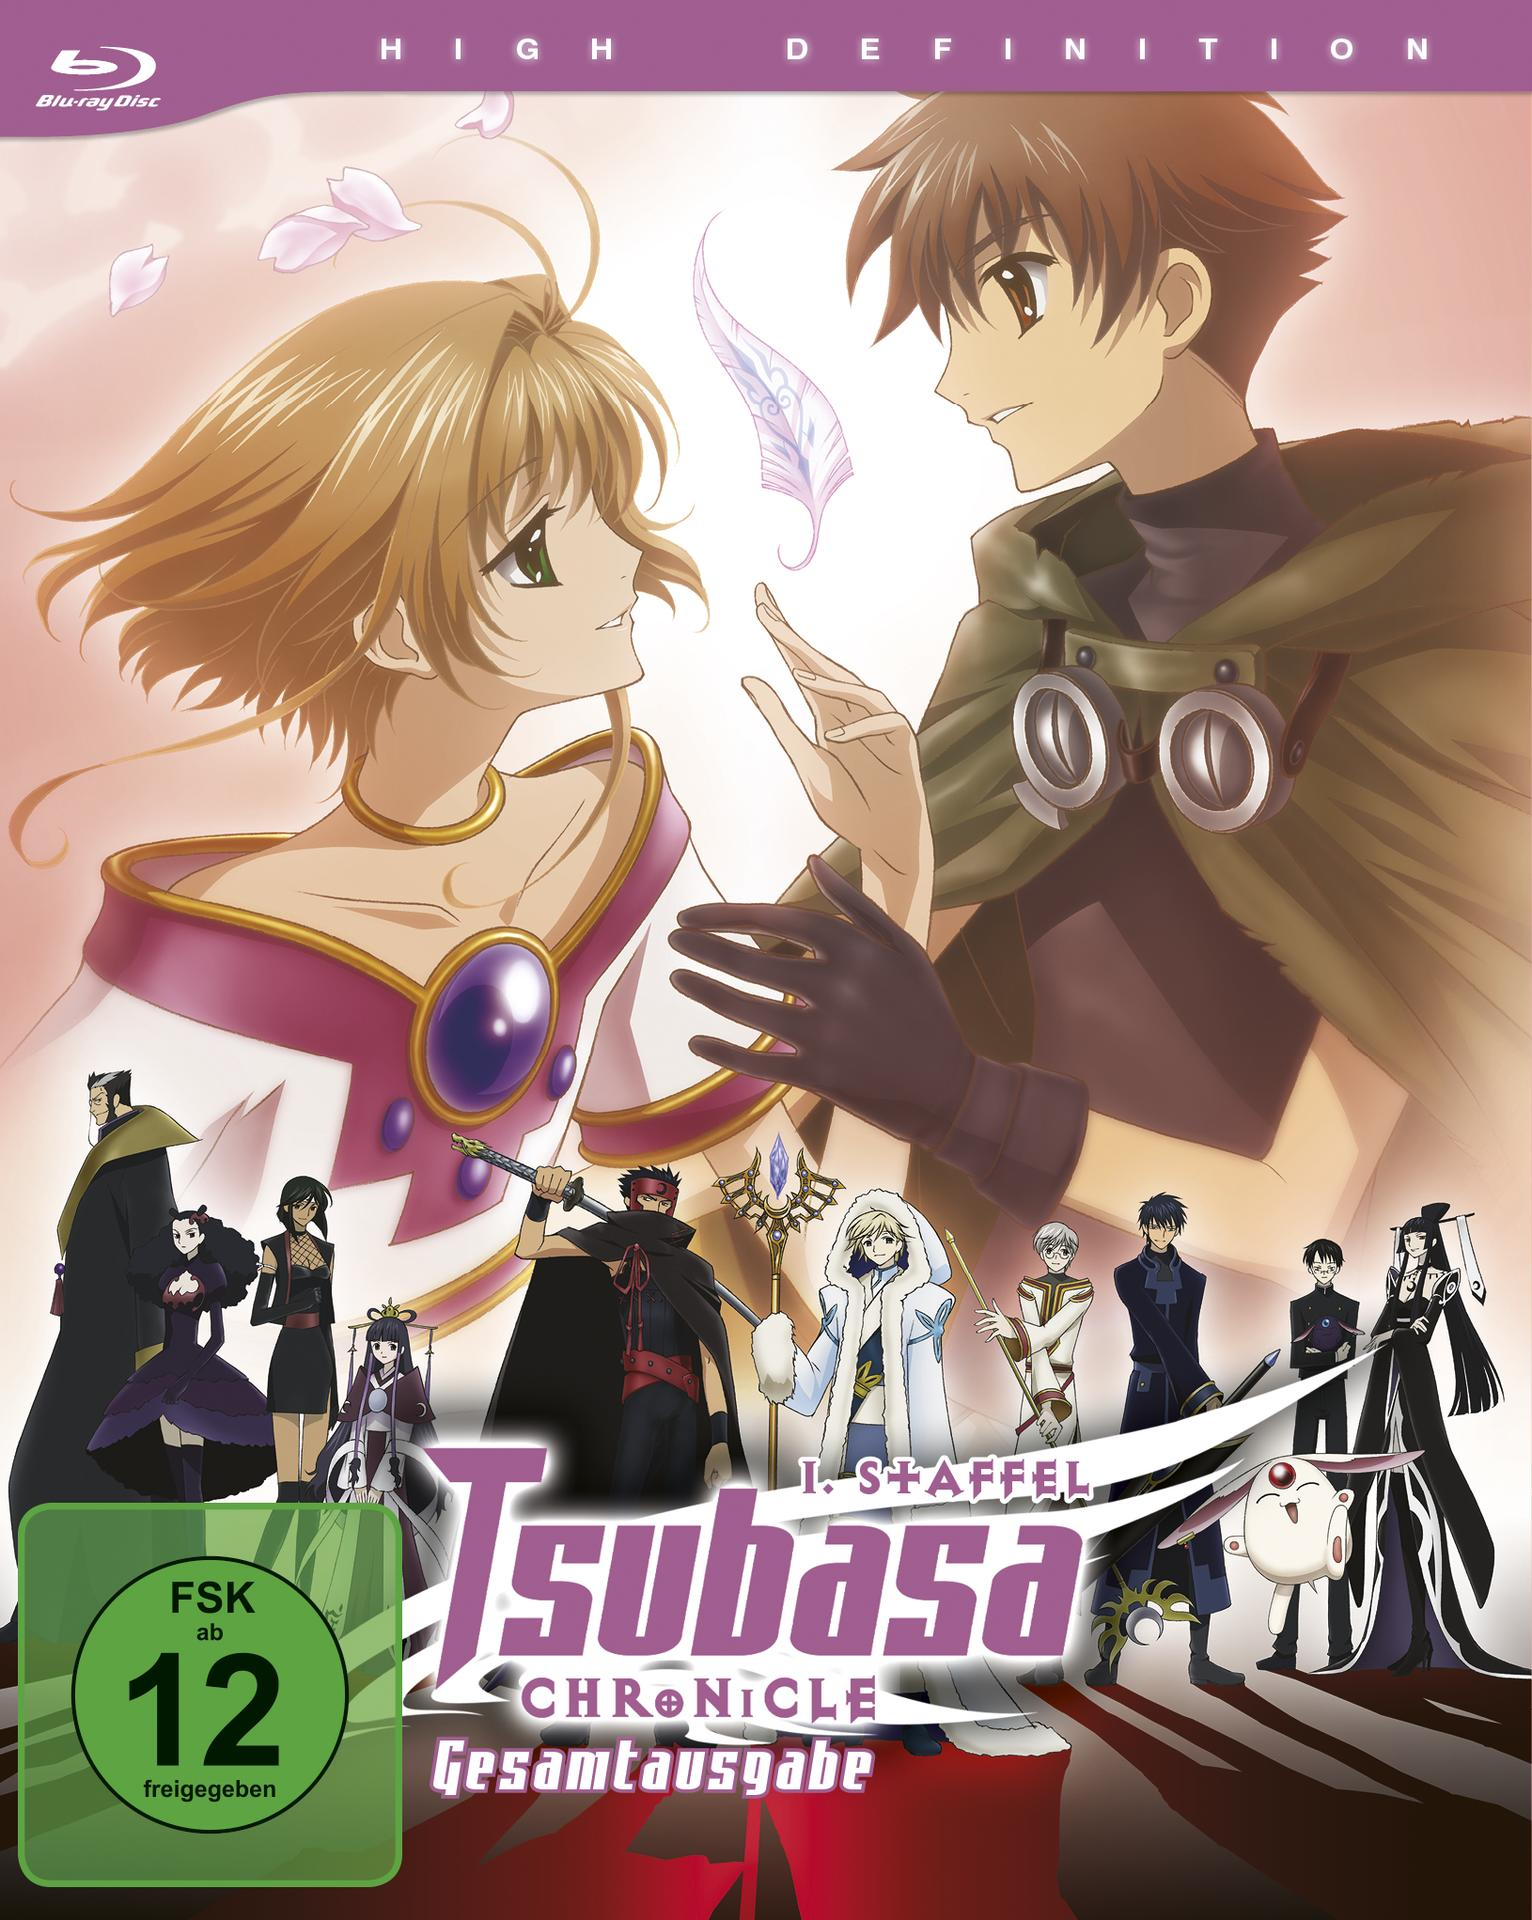 Tsubasa Chronicle - Blu-ray - Gesamtausgabe Staffel 1